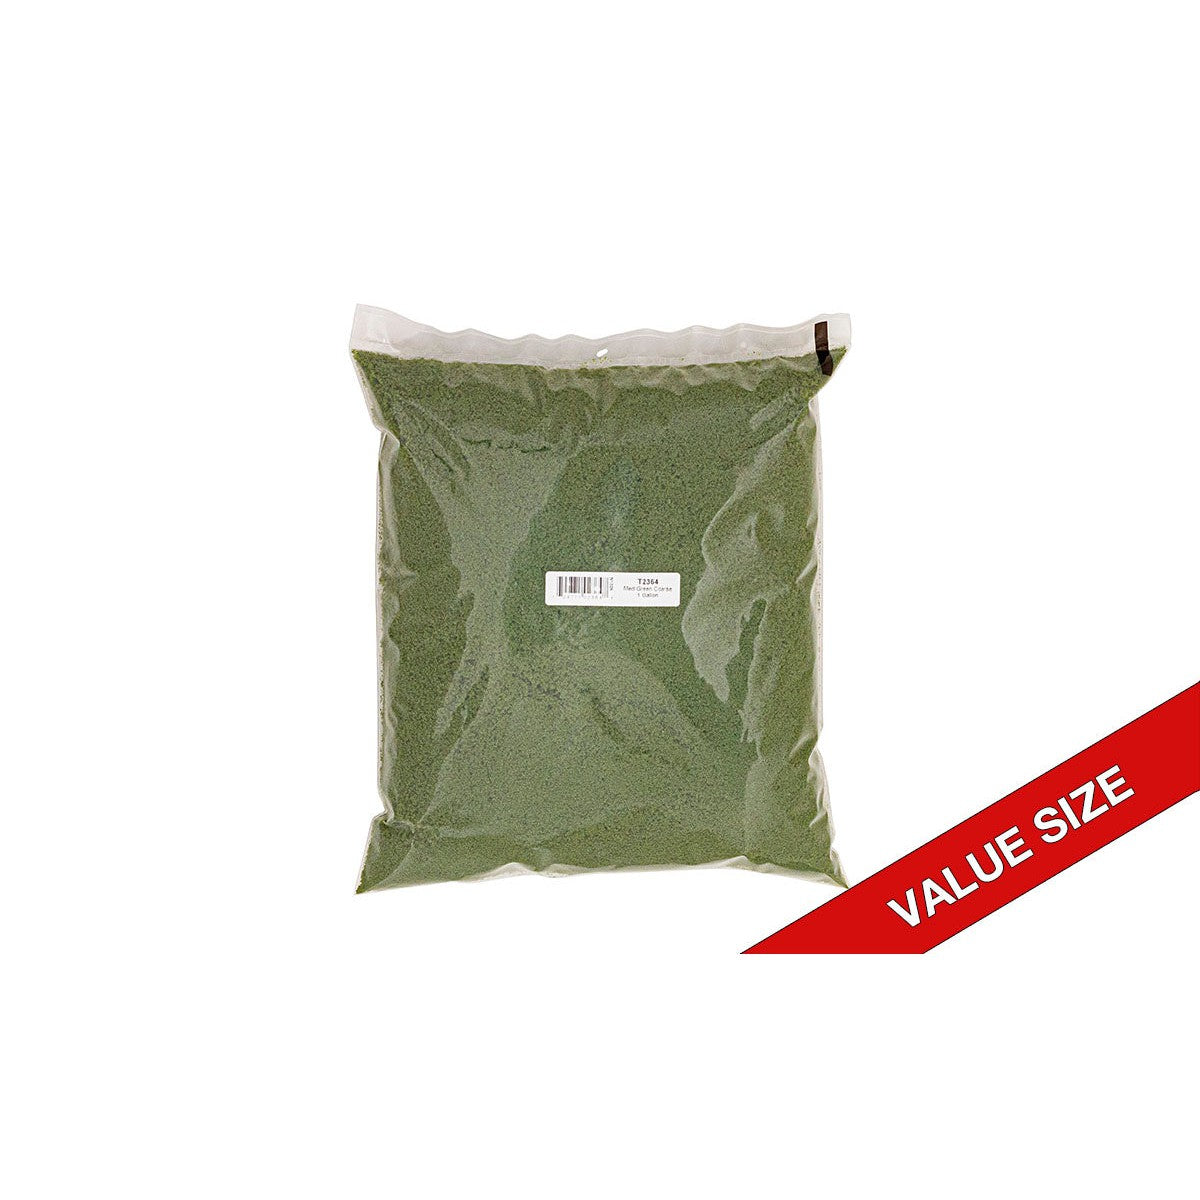 Woodland Scenics Medium Green Coarse Turf Value Size Bag